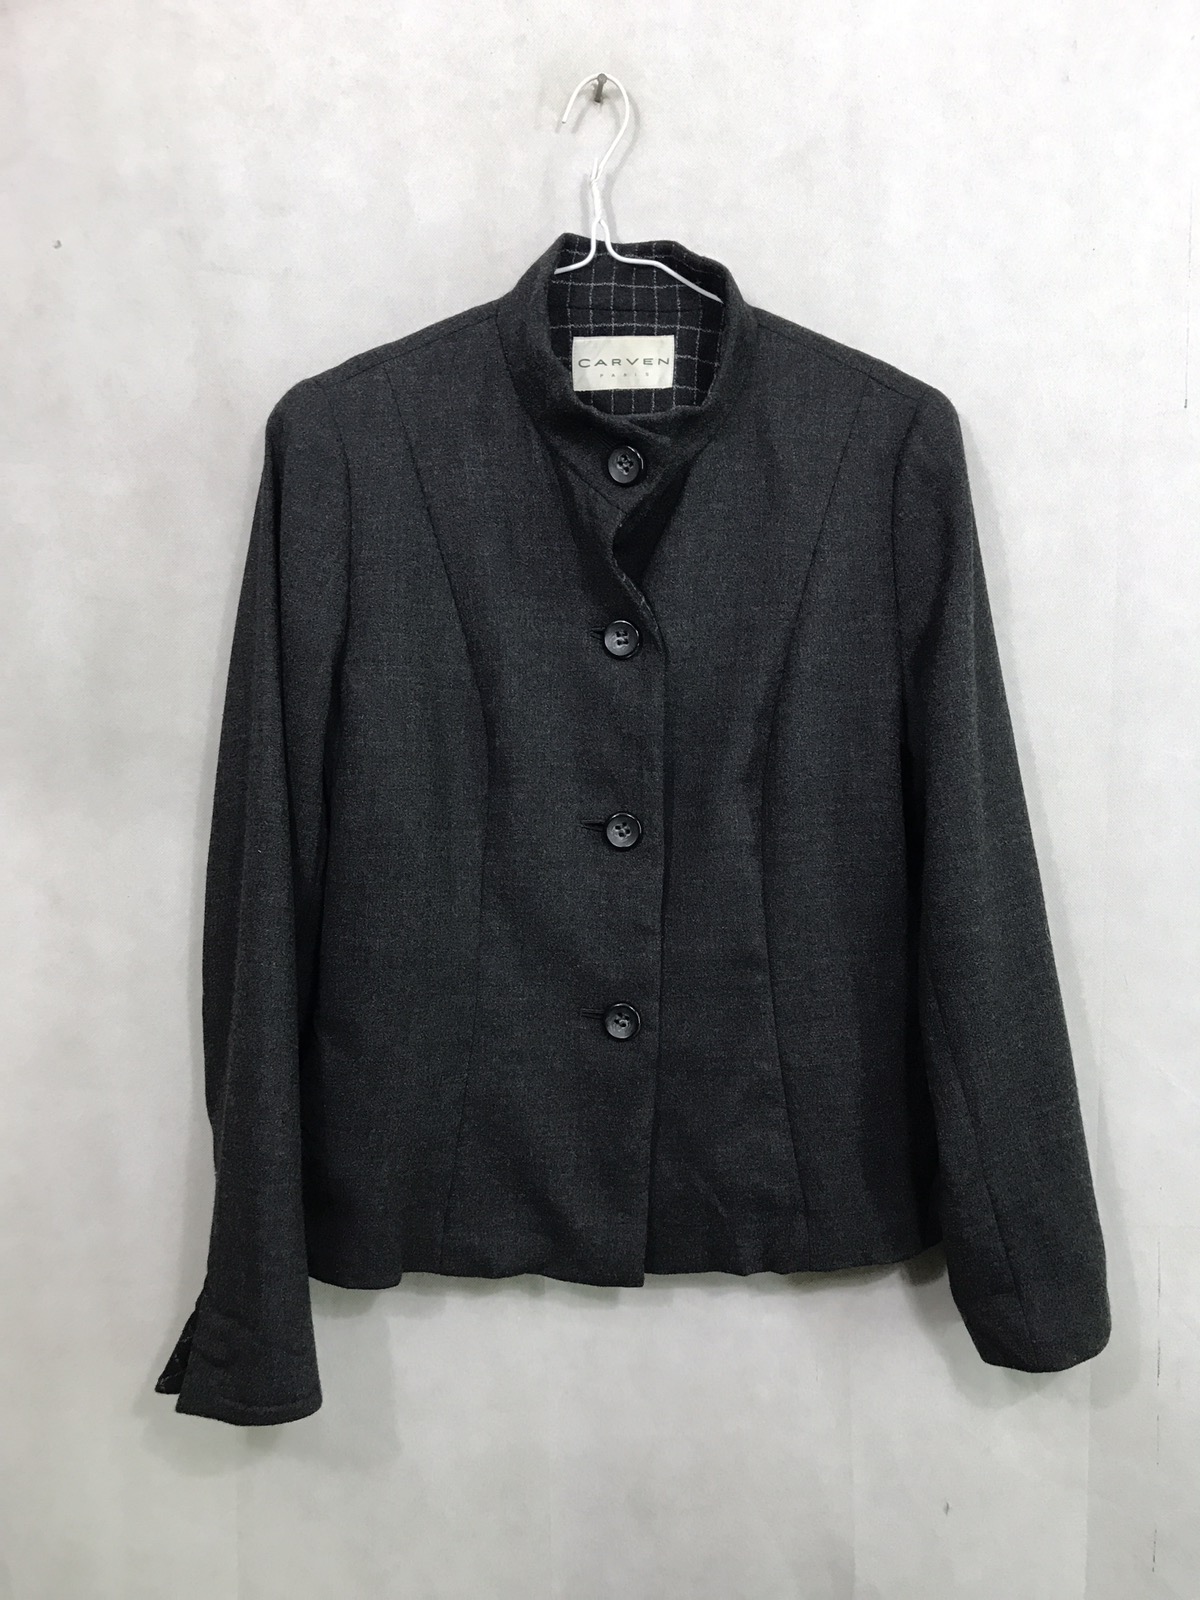 Carven wool jacket - 1